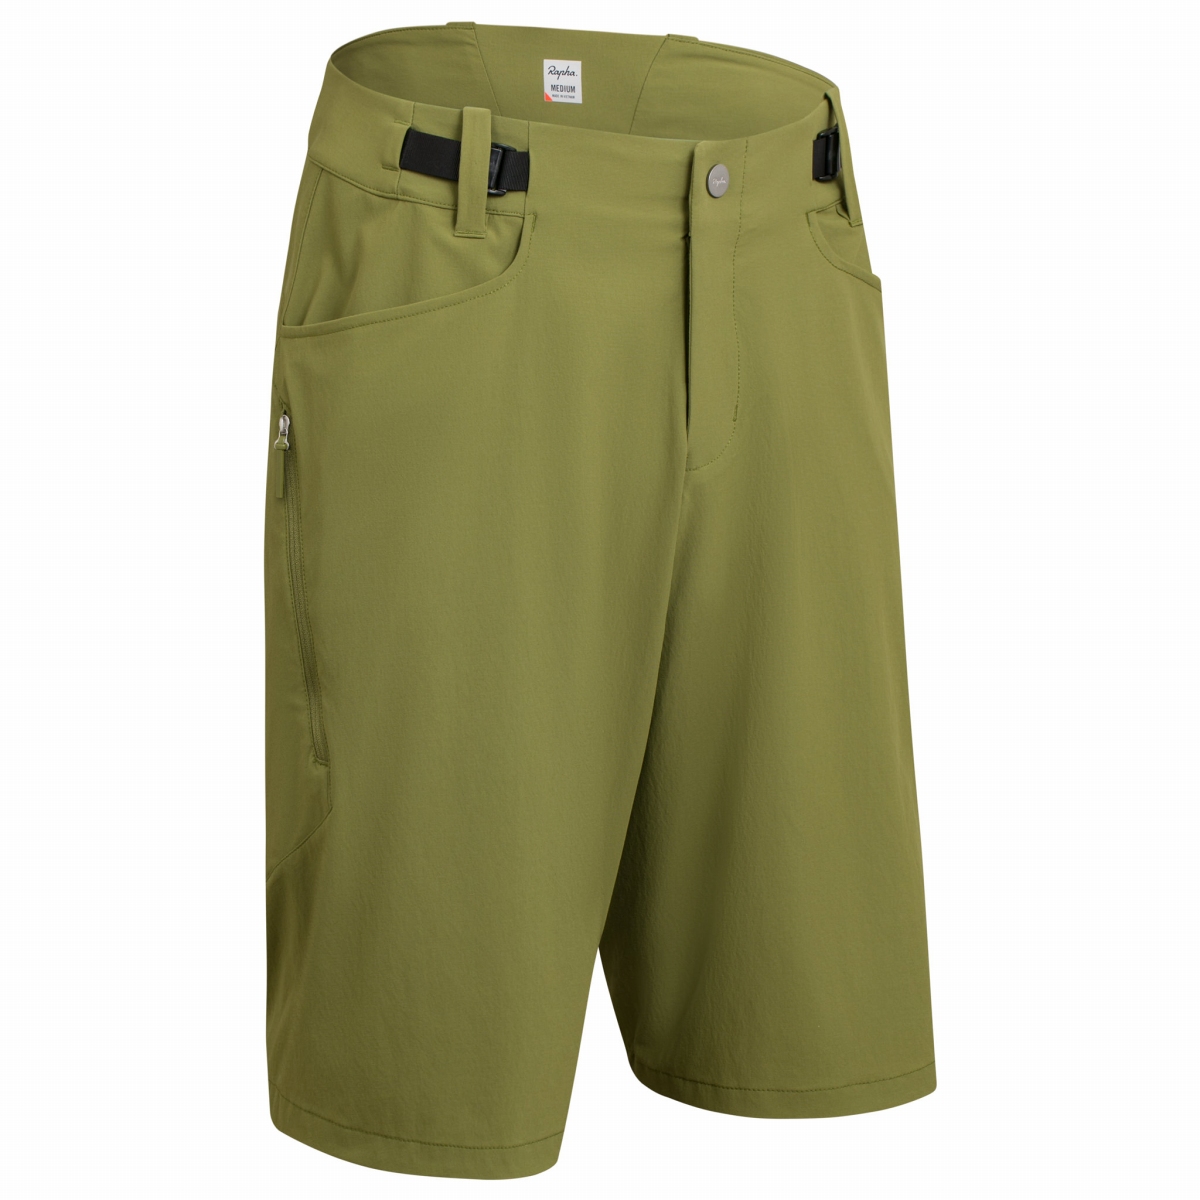 Rapha Trail Shorts（Green / Black）